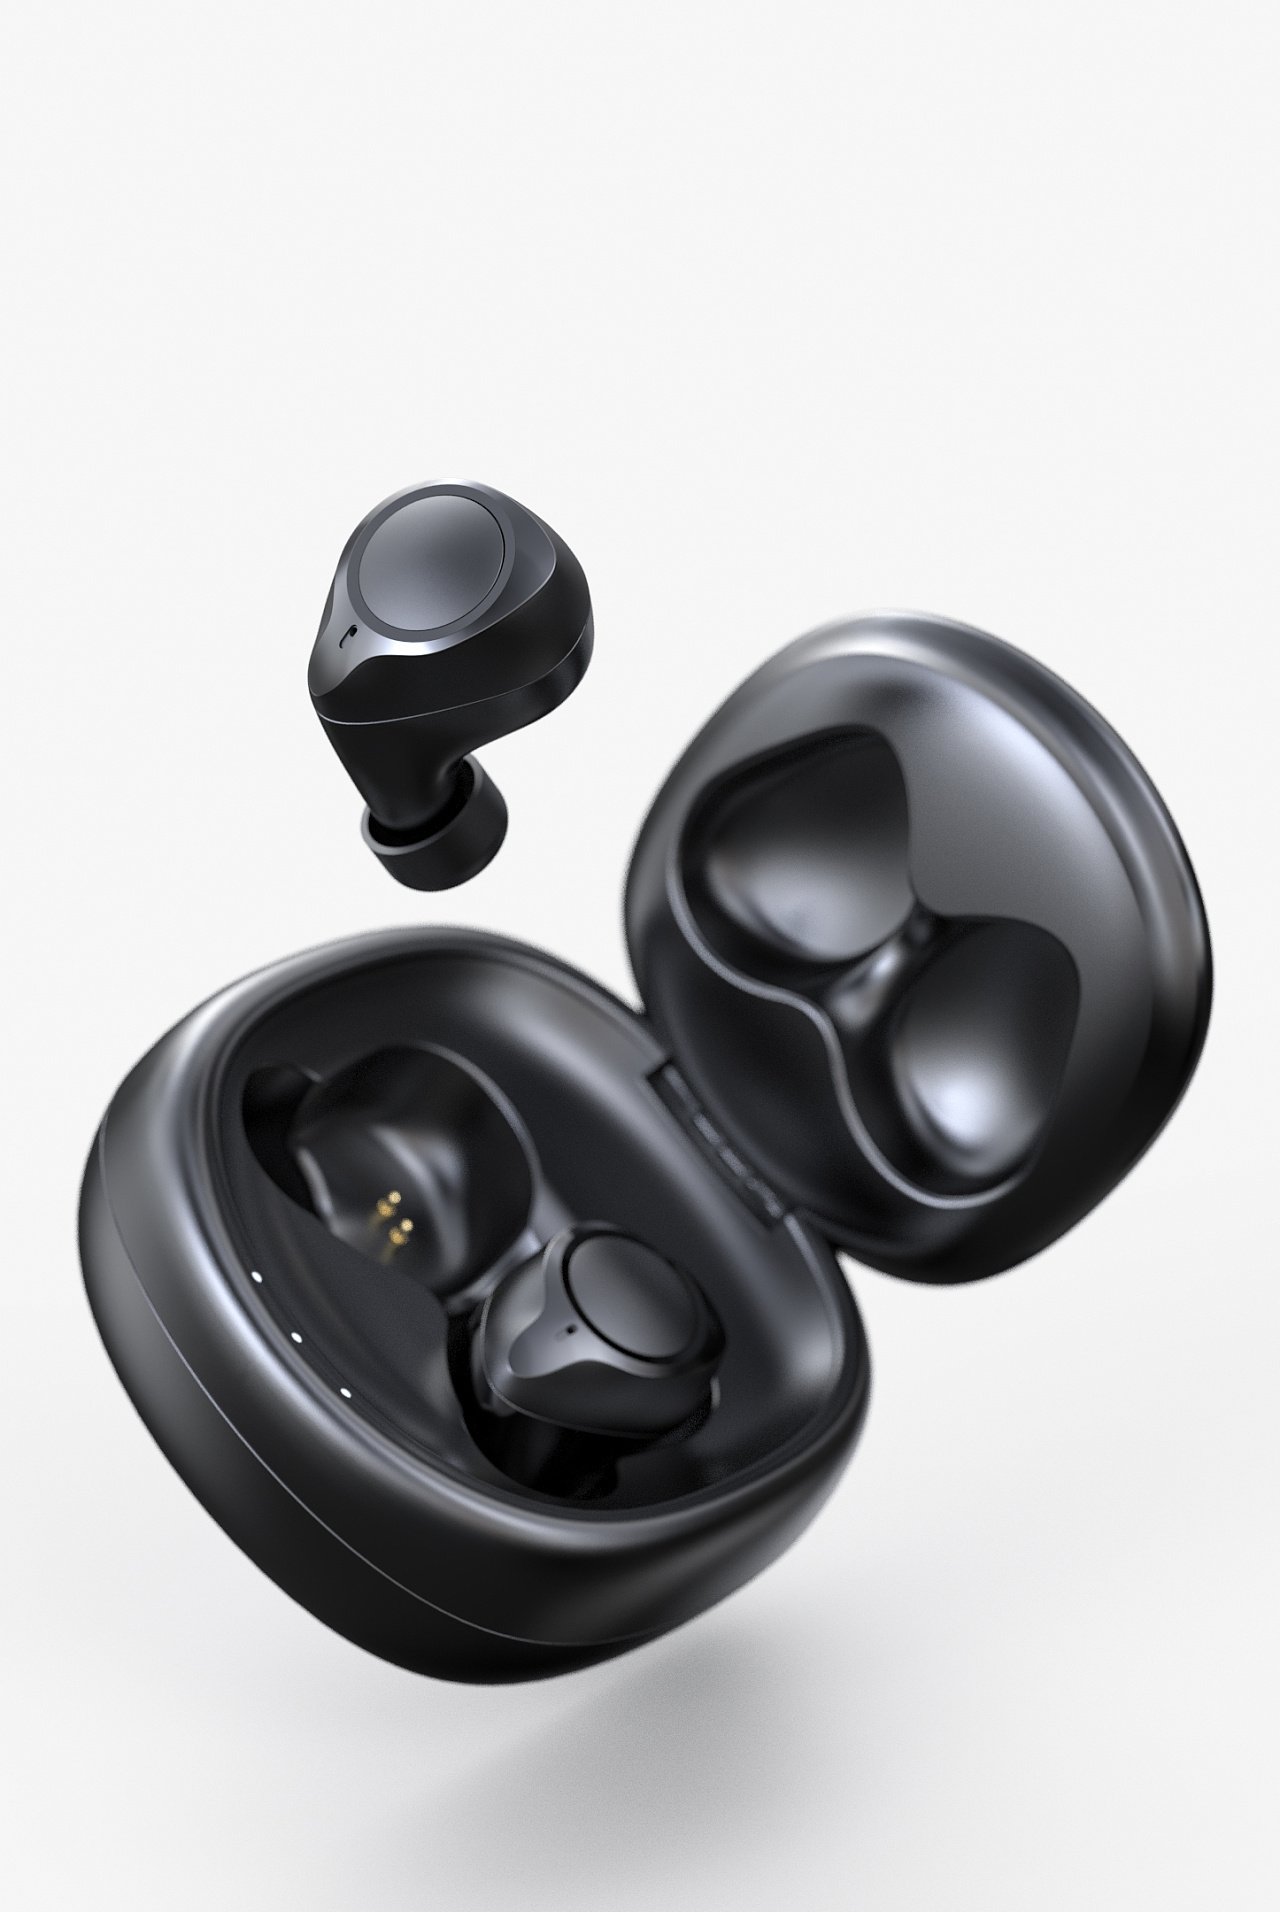 ABRAMTEK E8真无线蓝牙耳机 - 艾特铭客科技-蓝牙 音箱 耳机 订制 研发|ODM/OEM工厂|艾特铭客音响技术厂家